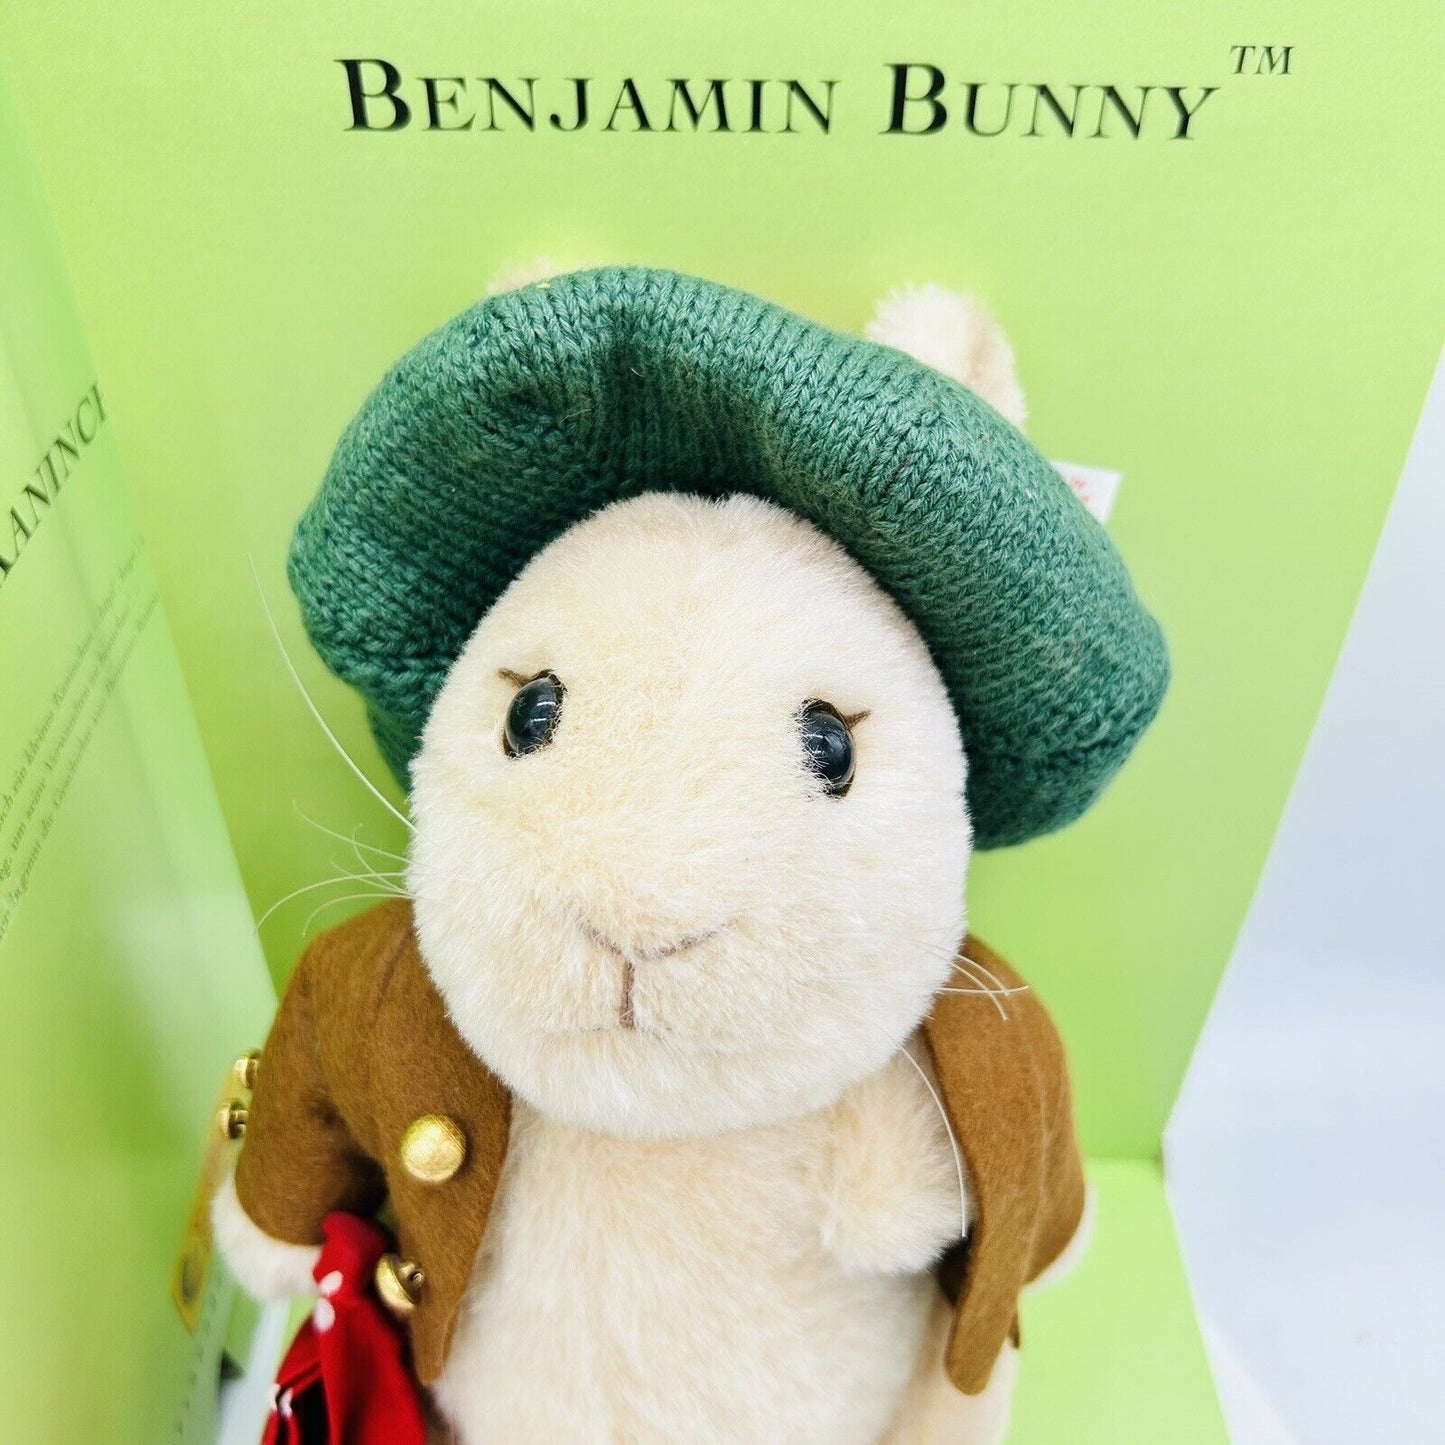 Steiff 354335 Kaninchen Benjamin Bunny aus Beatrix Potter limitiert 1500